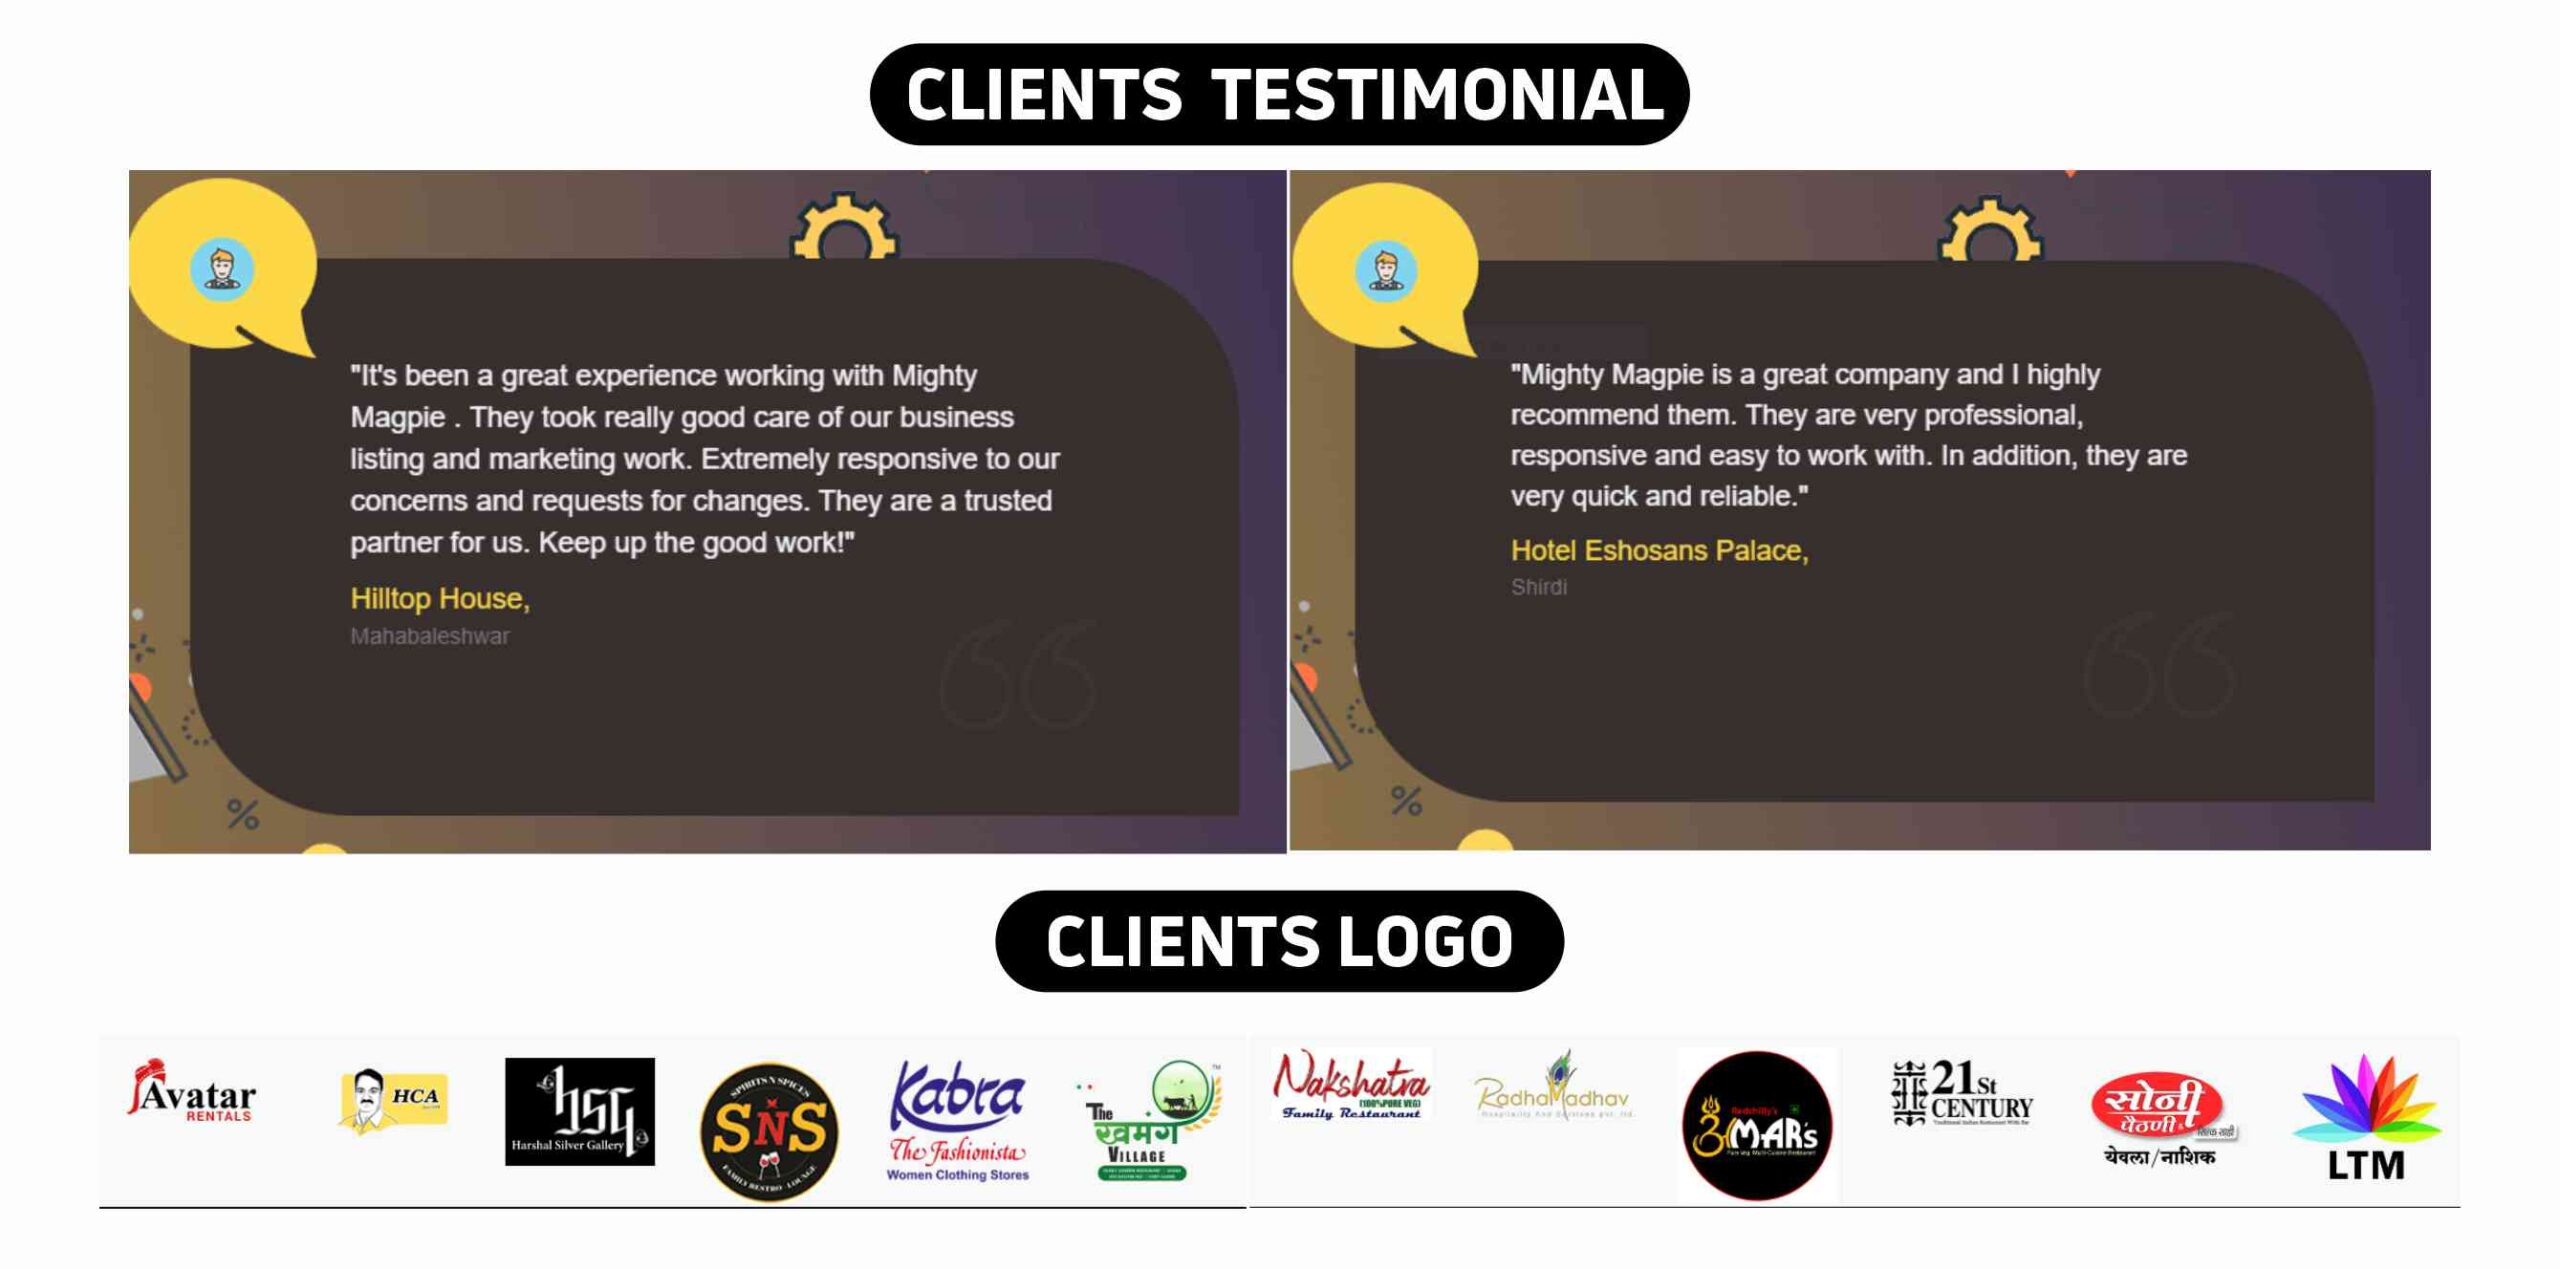 Mighty Magpie Client Testimonial & Logos 